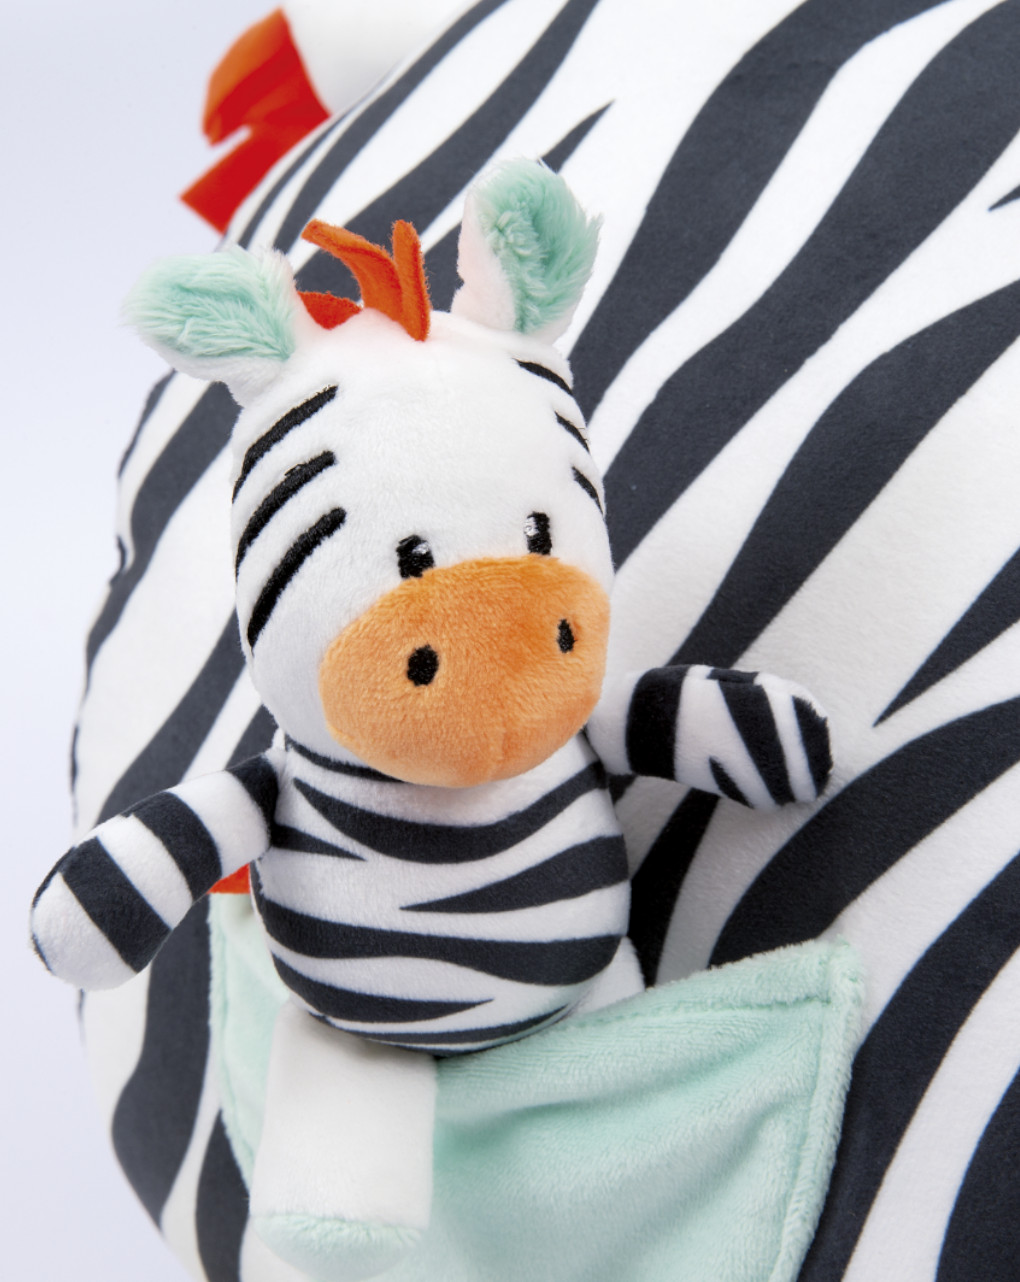 Zaki zebra  attività cavalcabile 62cm  - soft toys - Baby Smile